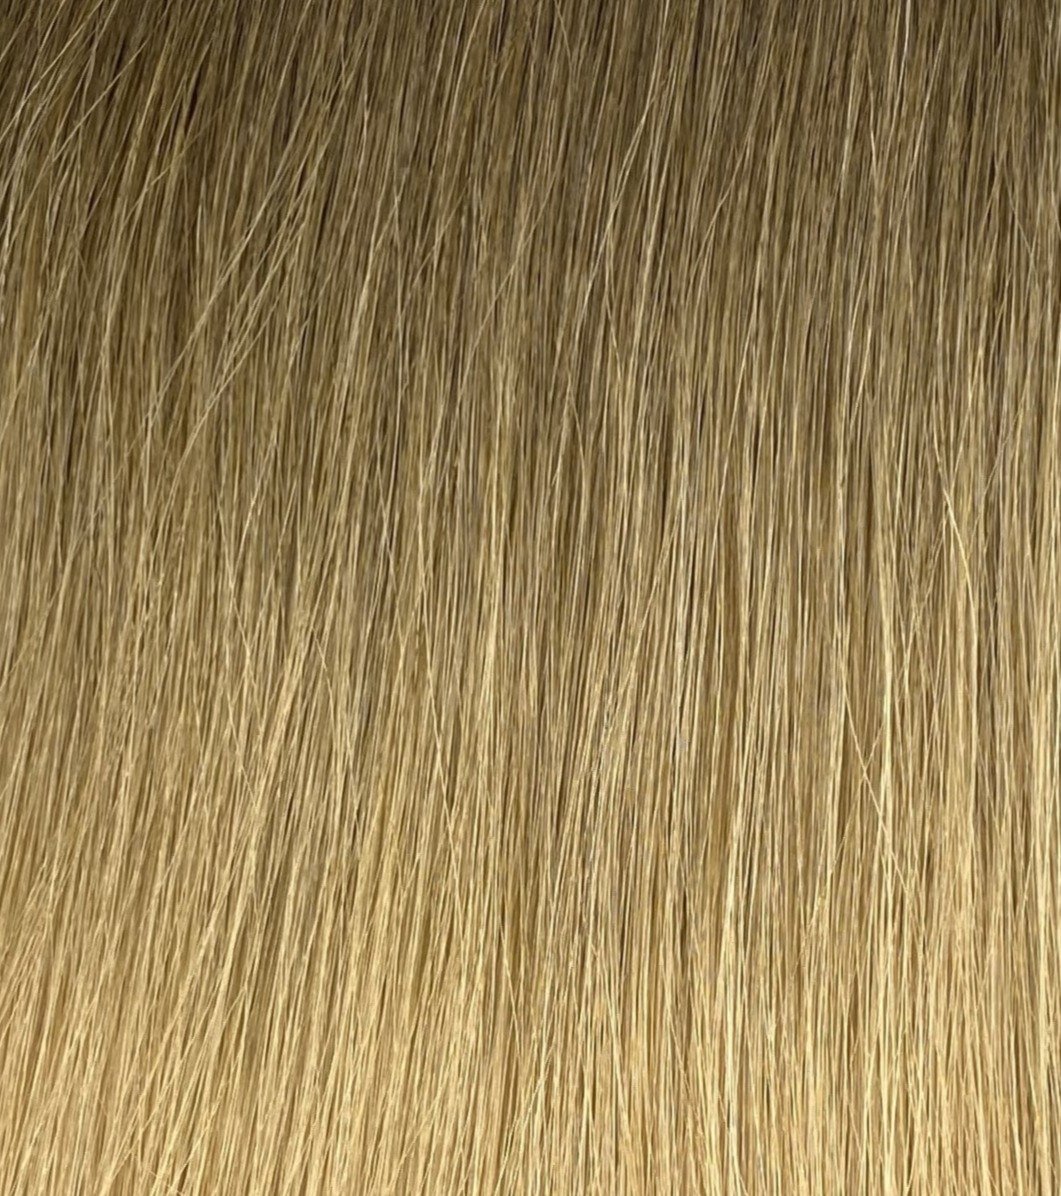 Double Weft Ombre #8 & DB4 - 20 Inches - Dark Blonde into Dark Golden Blonde - 60 Grams - Image 1